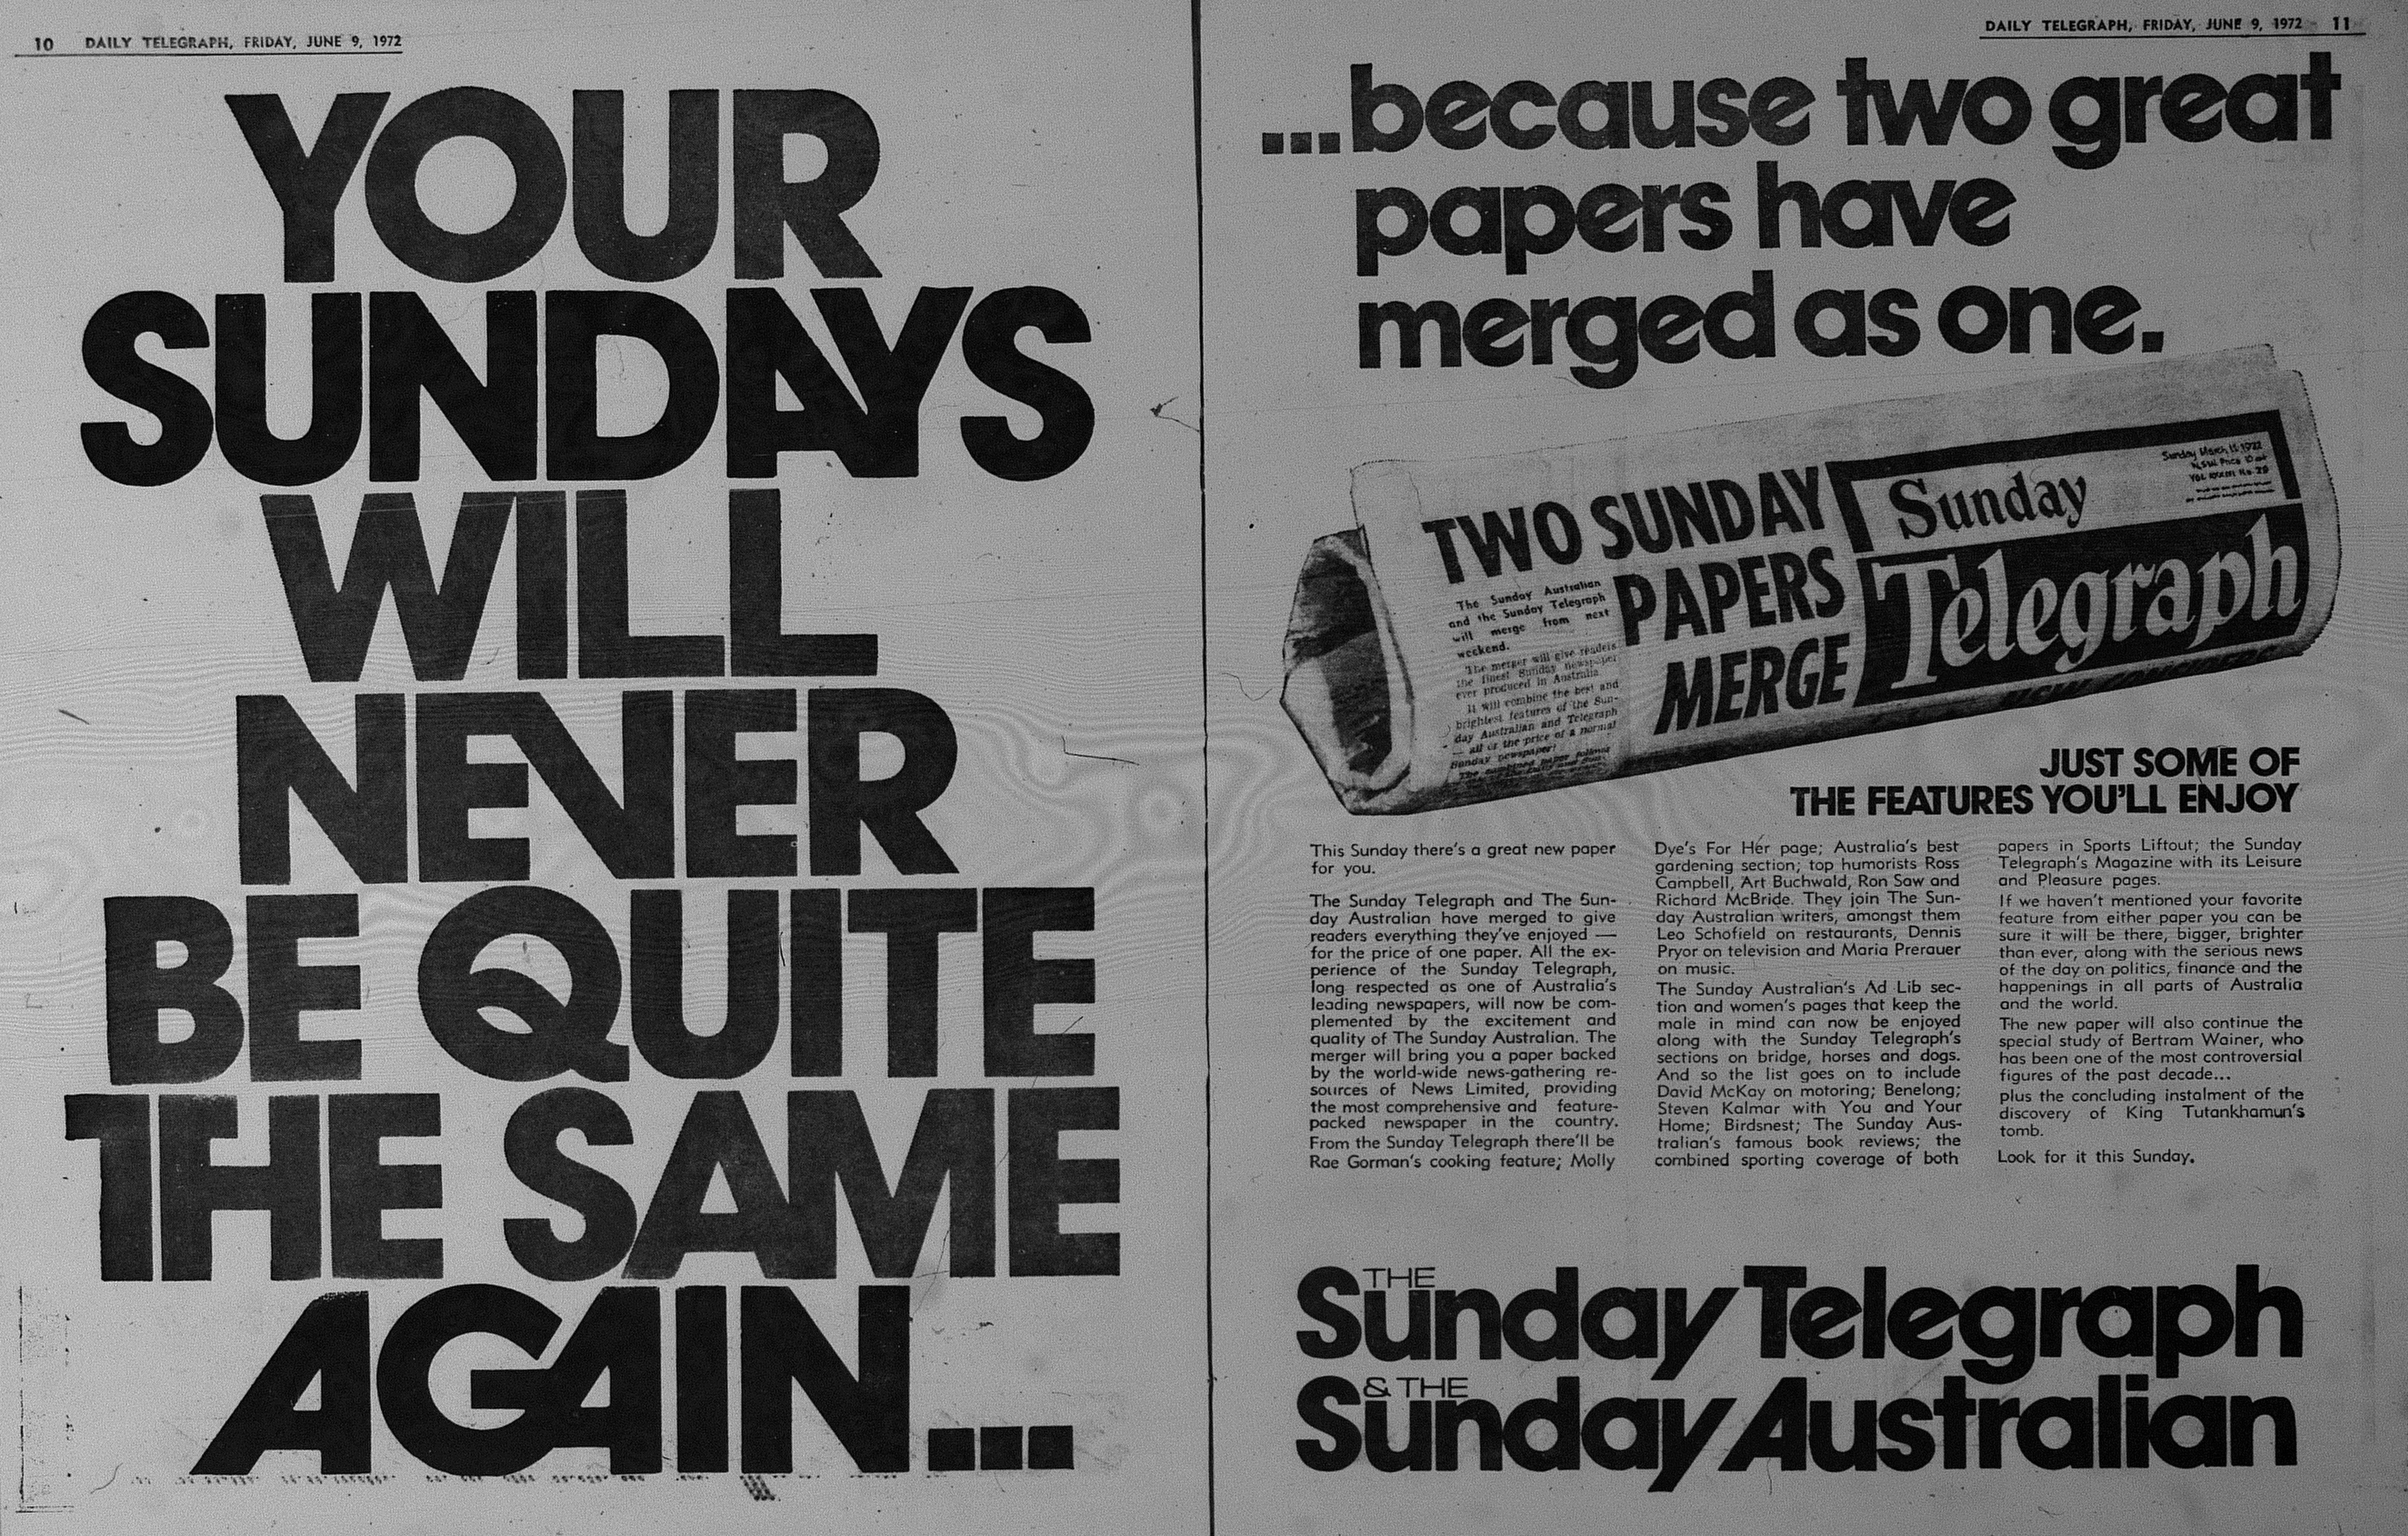 New Sunday Telegraph Ad June 9 1972 daily telegraph 10-11